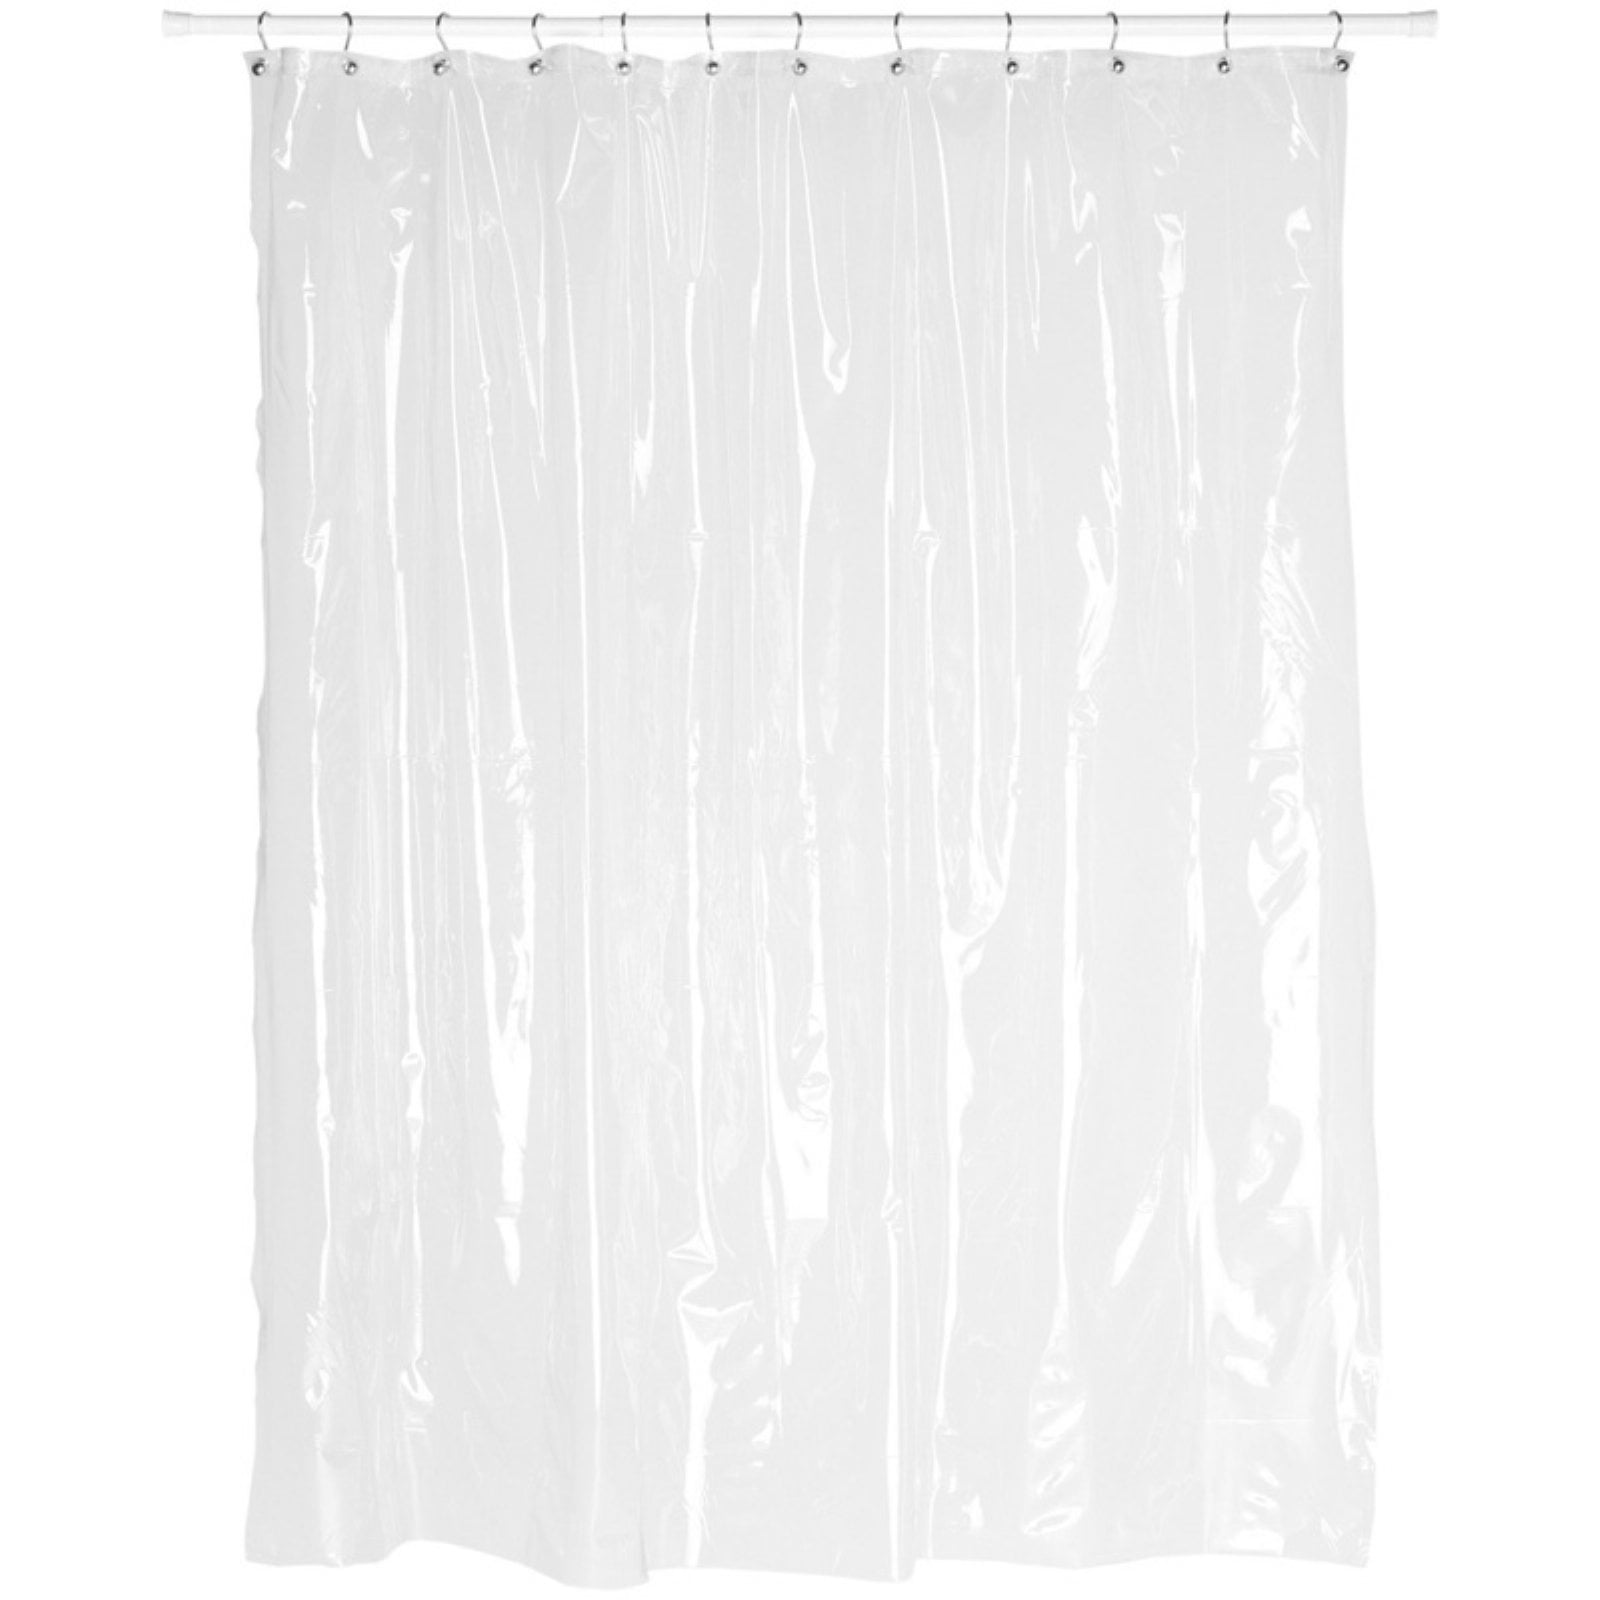 Lush Decor Lucia Textured Polyester, Lush Decor Lucia Shower Curtain